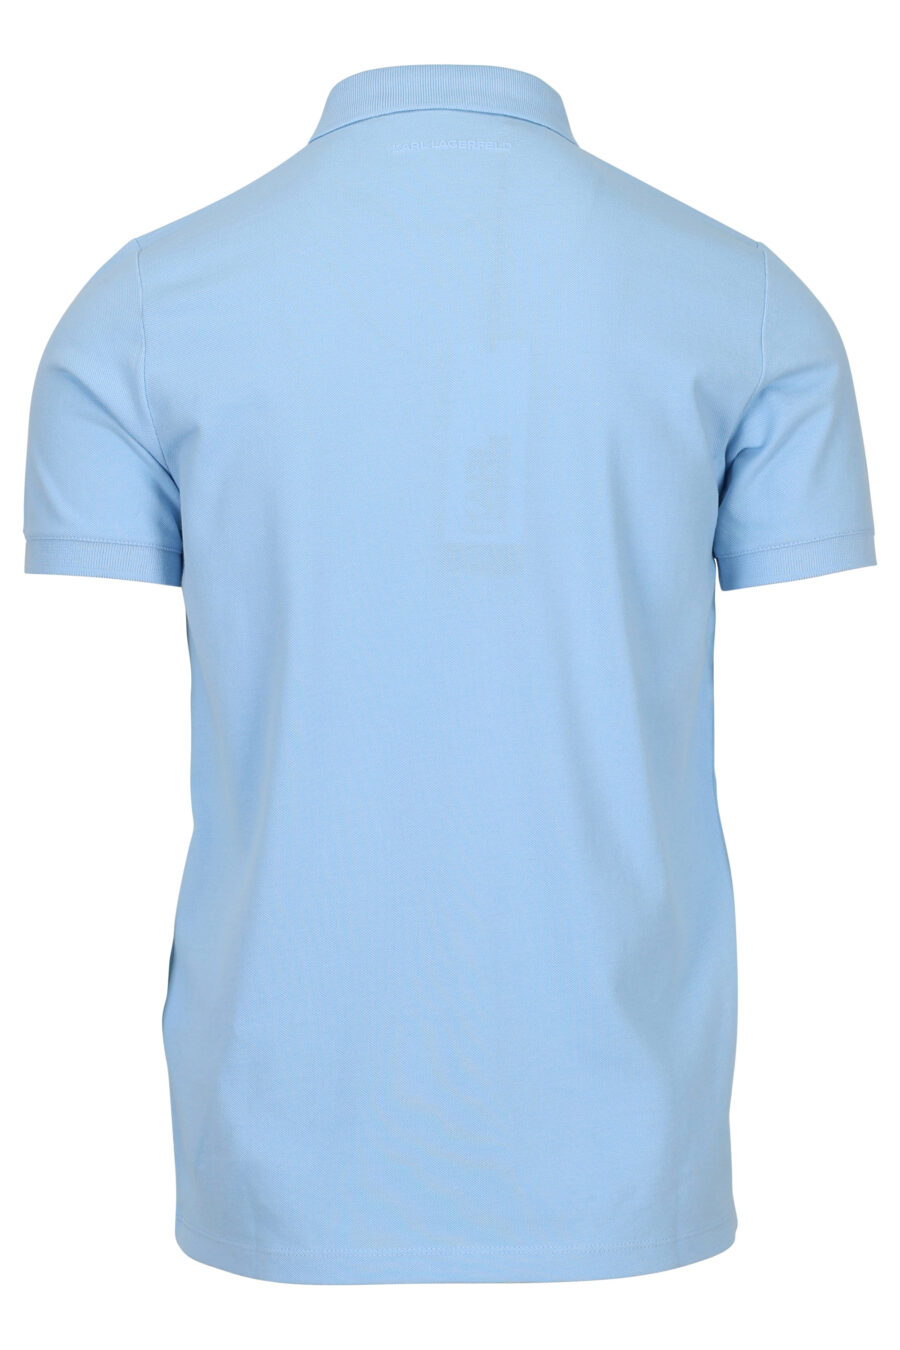 Pólo azul claro com mini-logotipo vertical "karl" - 4062226785921 1